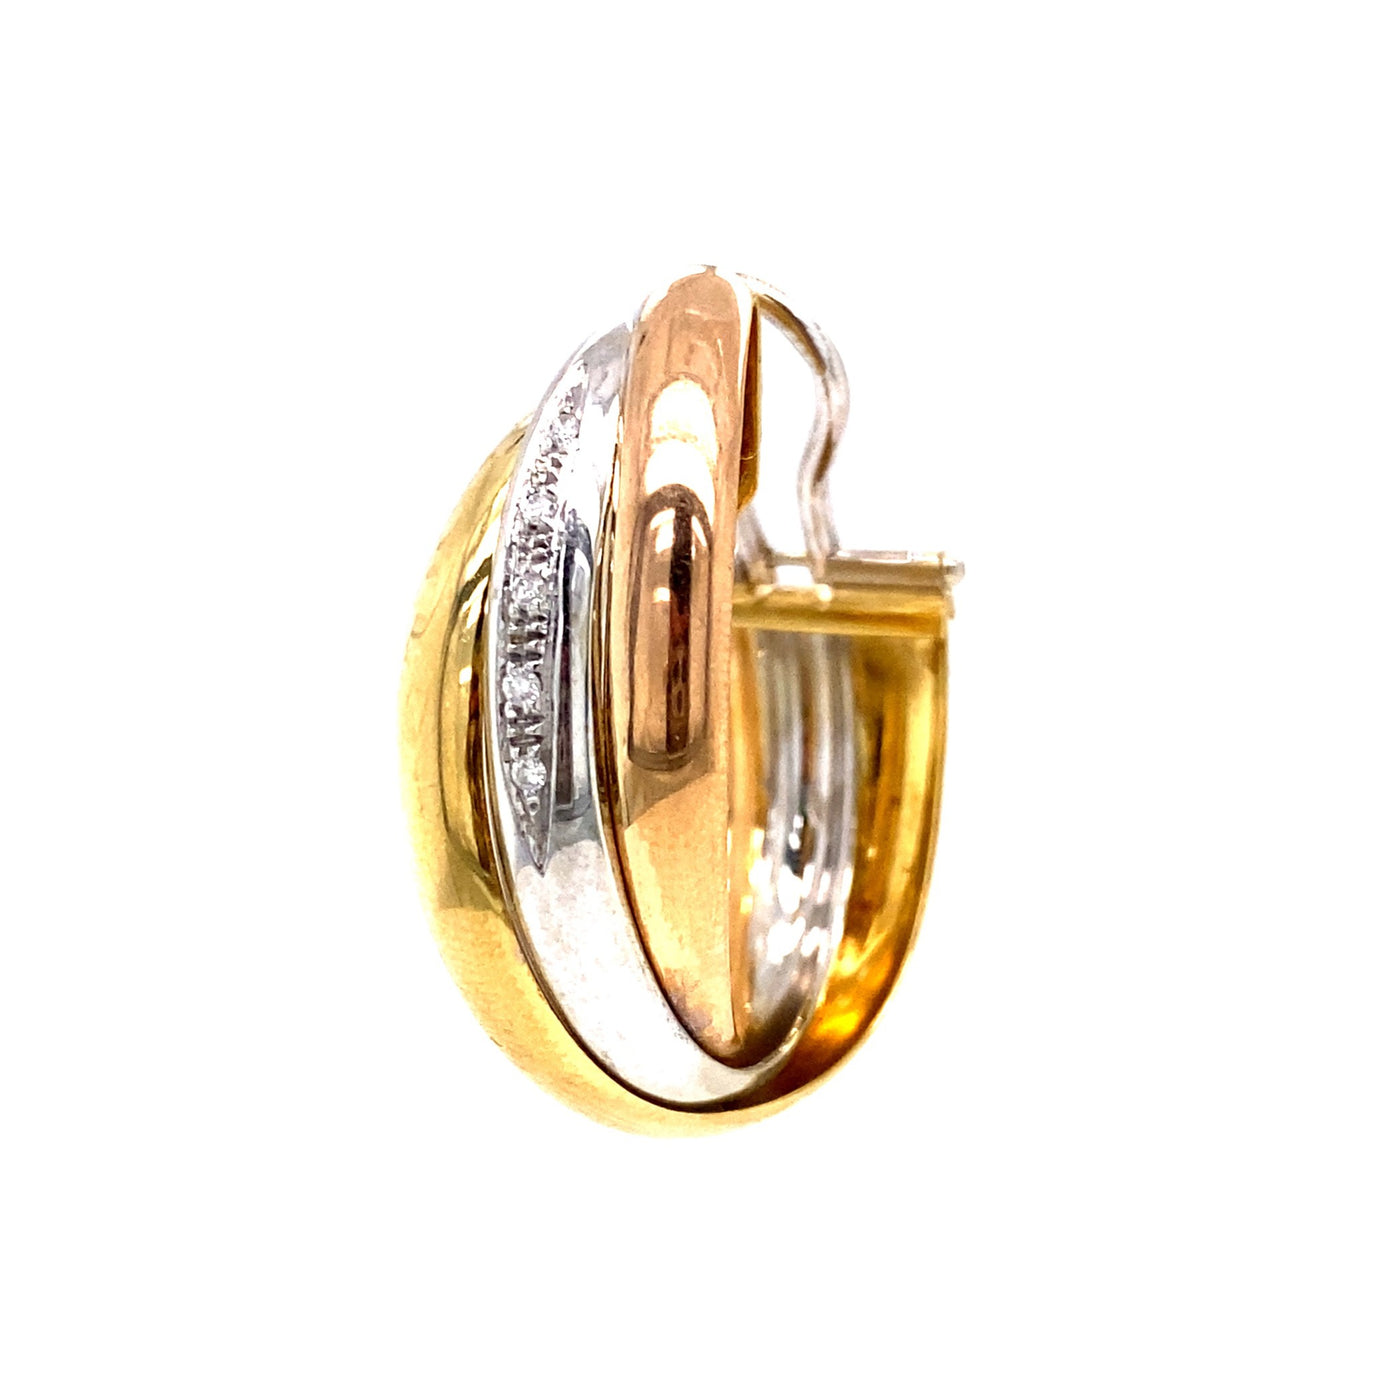 Shining Golden Togetherness - Goldohrringe Tricolor mit Diamanten